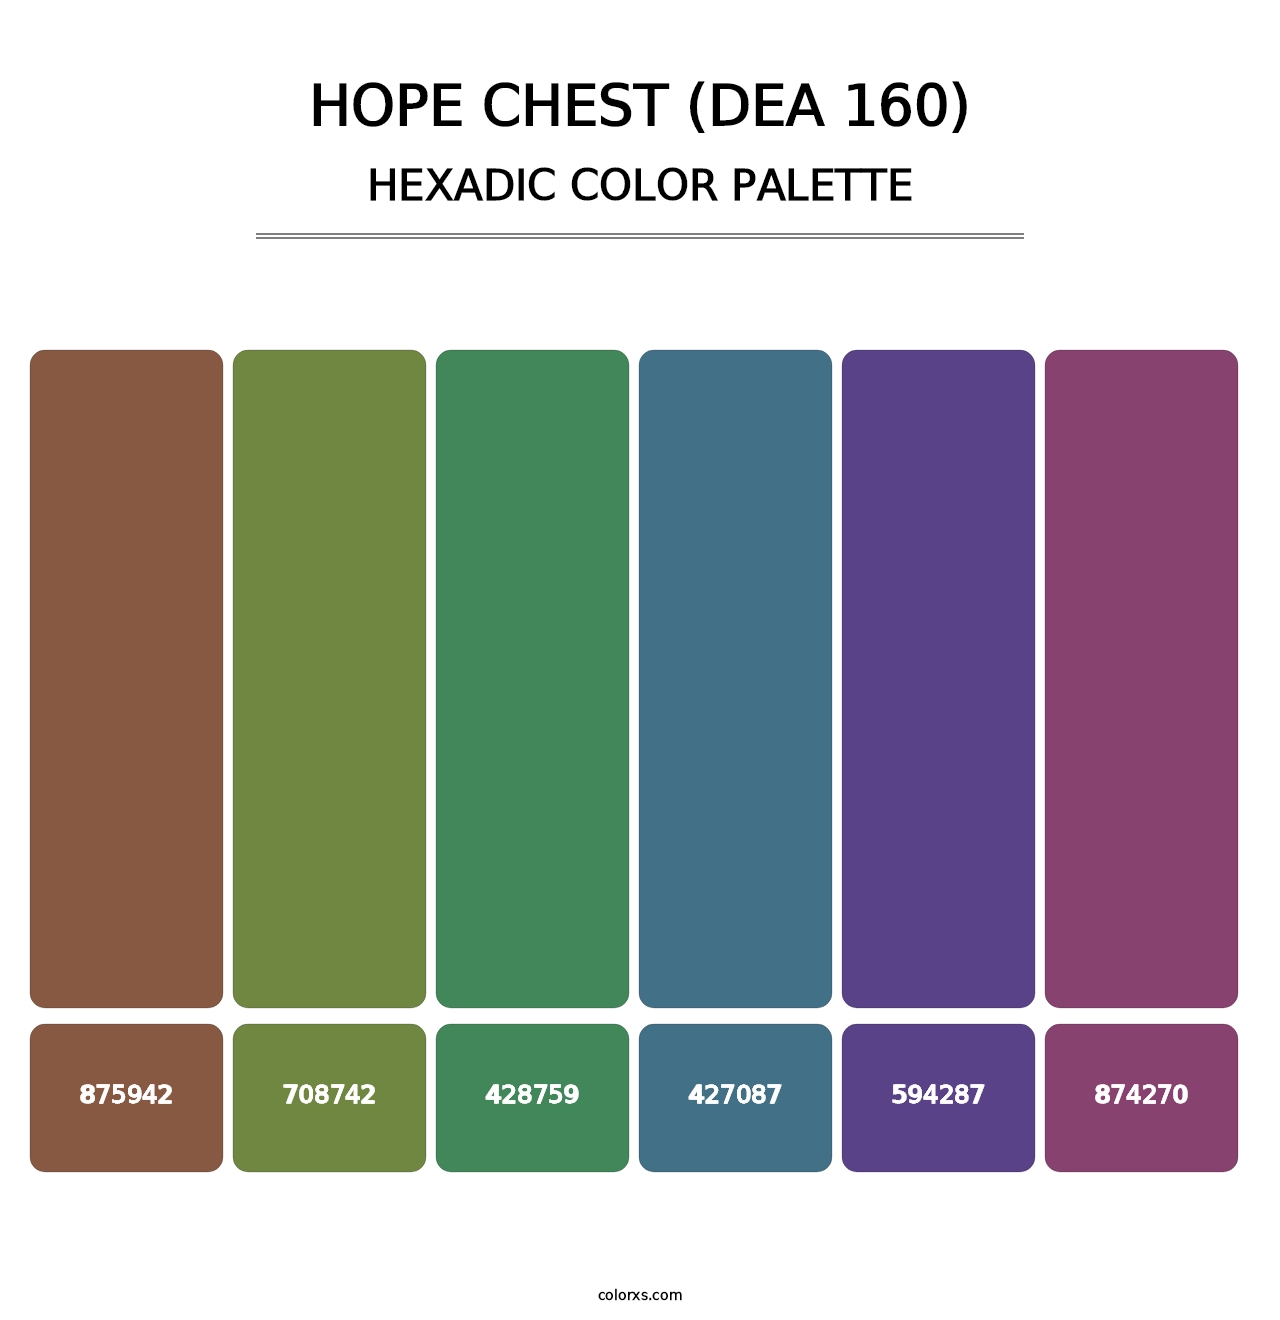 Hope Chest (DEA 160) - Hexadic Color Palette